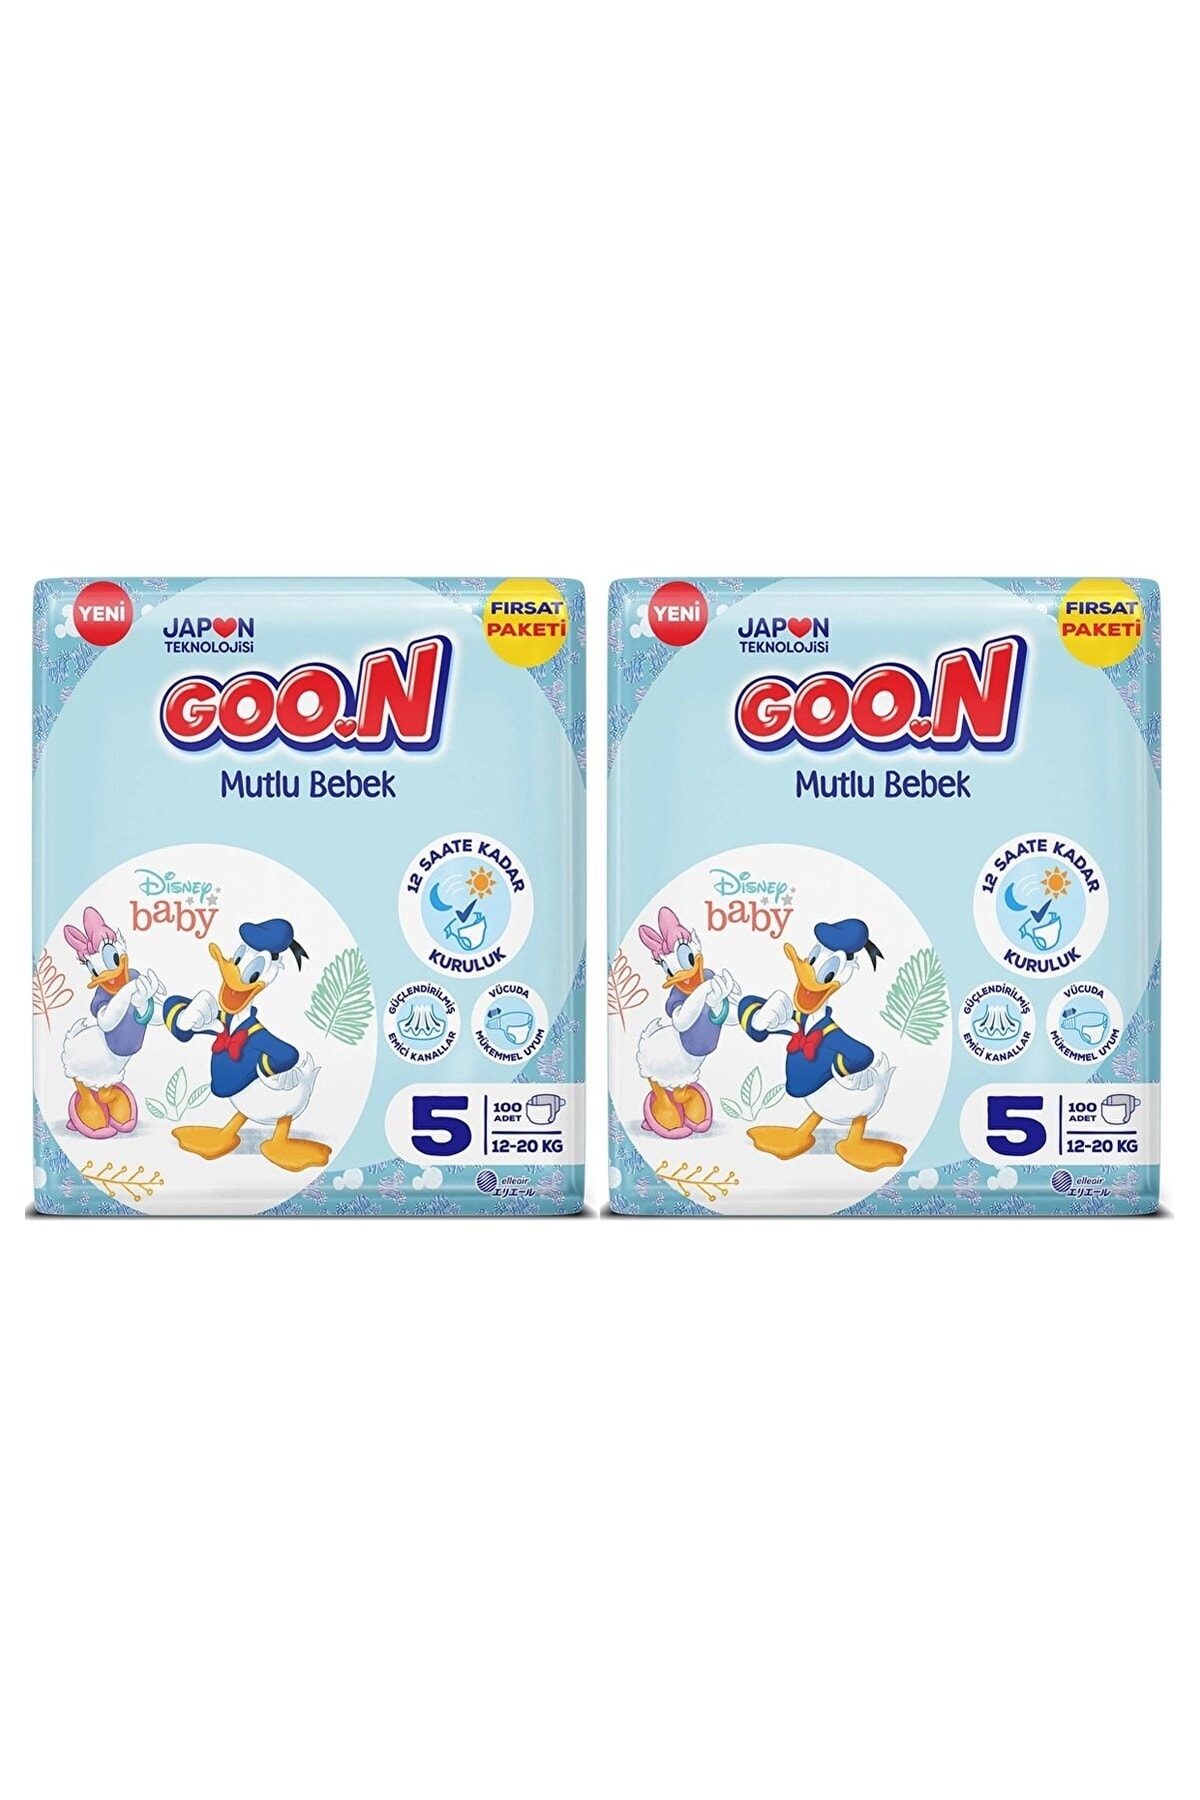 Goo.n Goon Premium Mutlu Bebek Fırsat Paketi 5 Numara 12 20 Kg 100' Lü 2 Paket 200 Adet